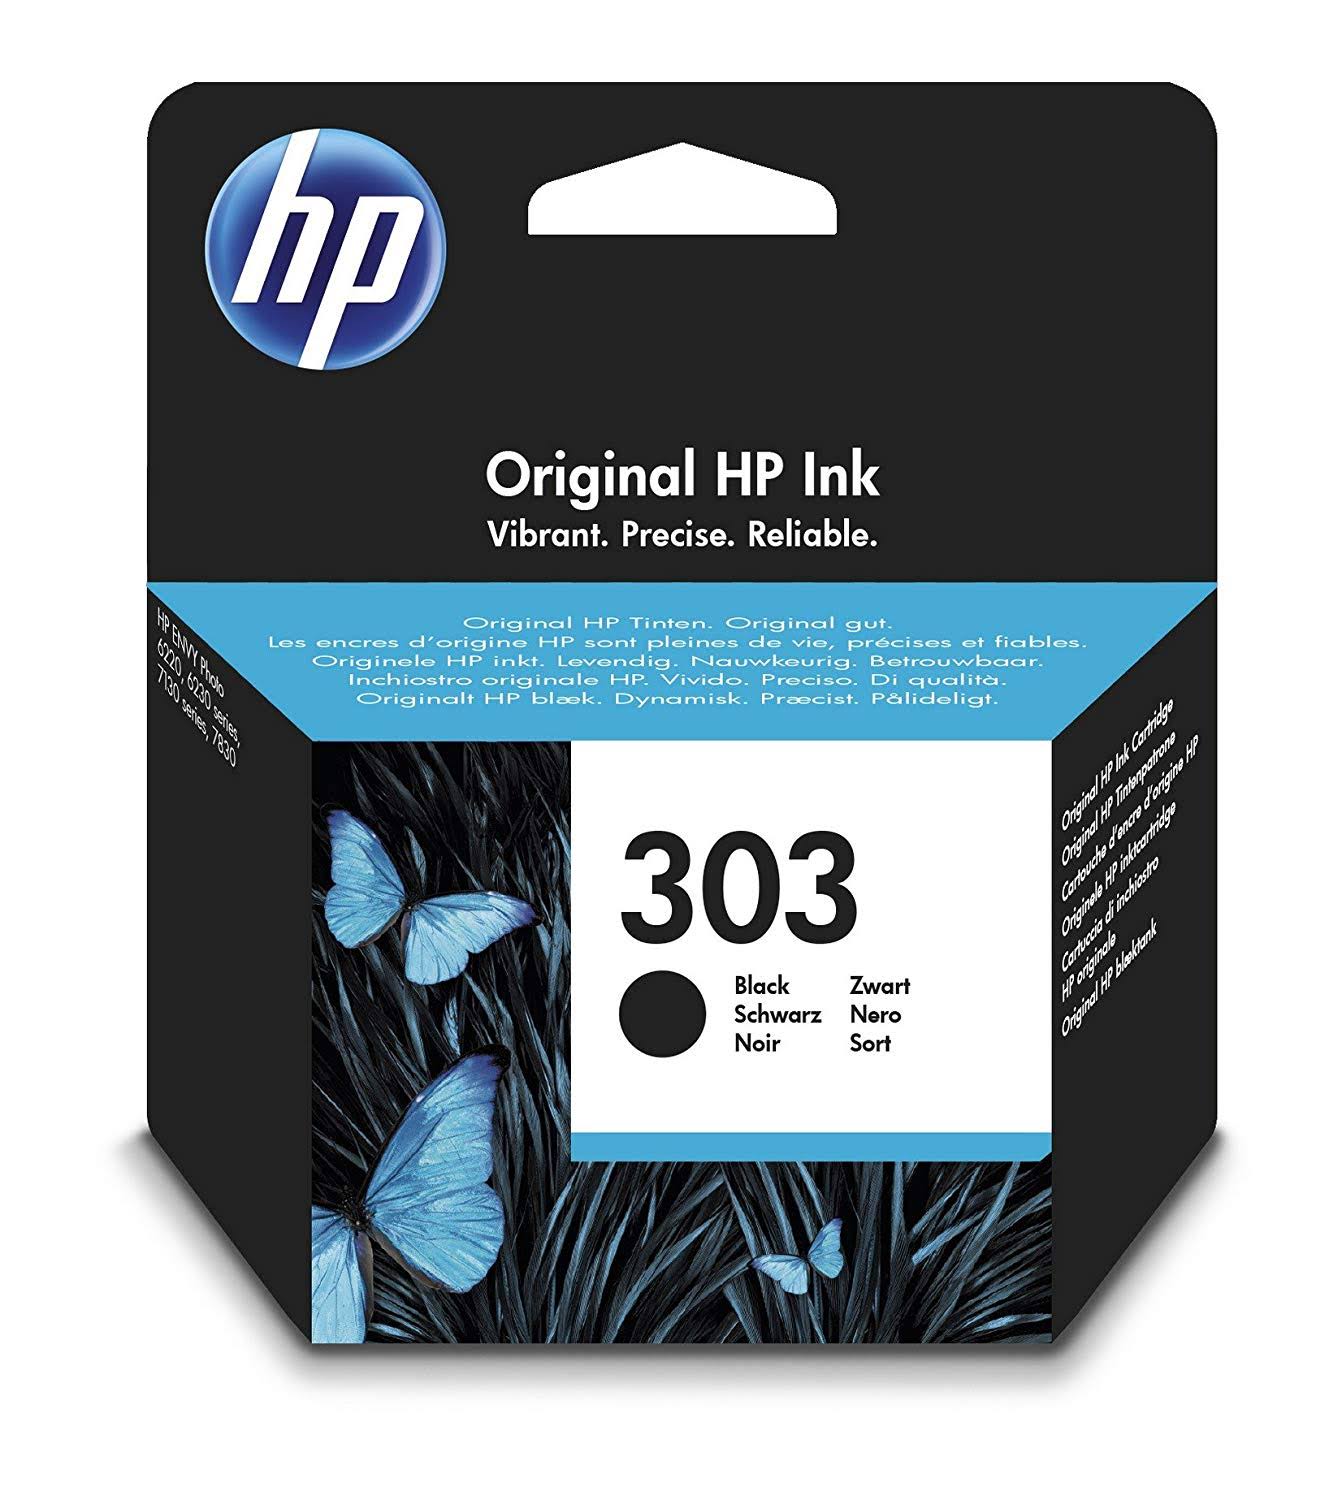 HP Original Ink Cartridge - 303 Black